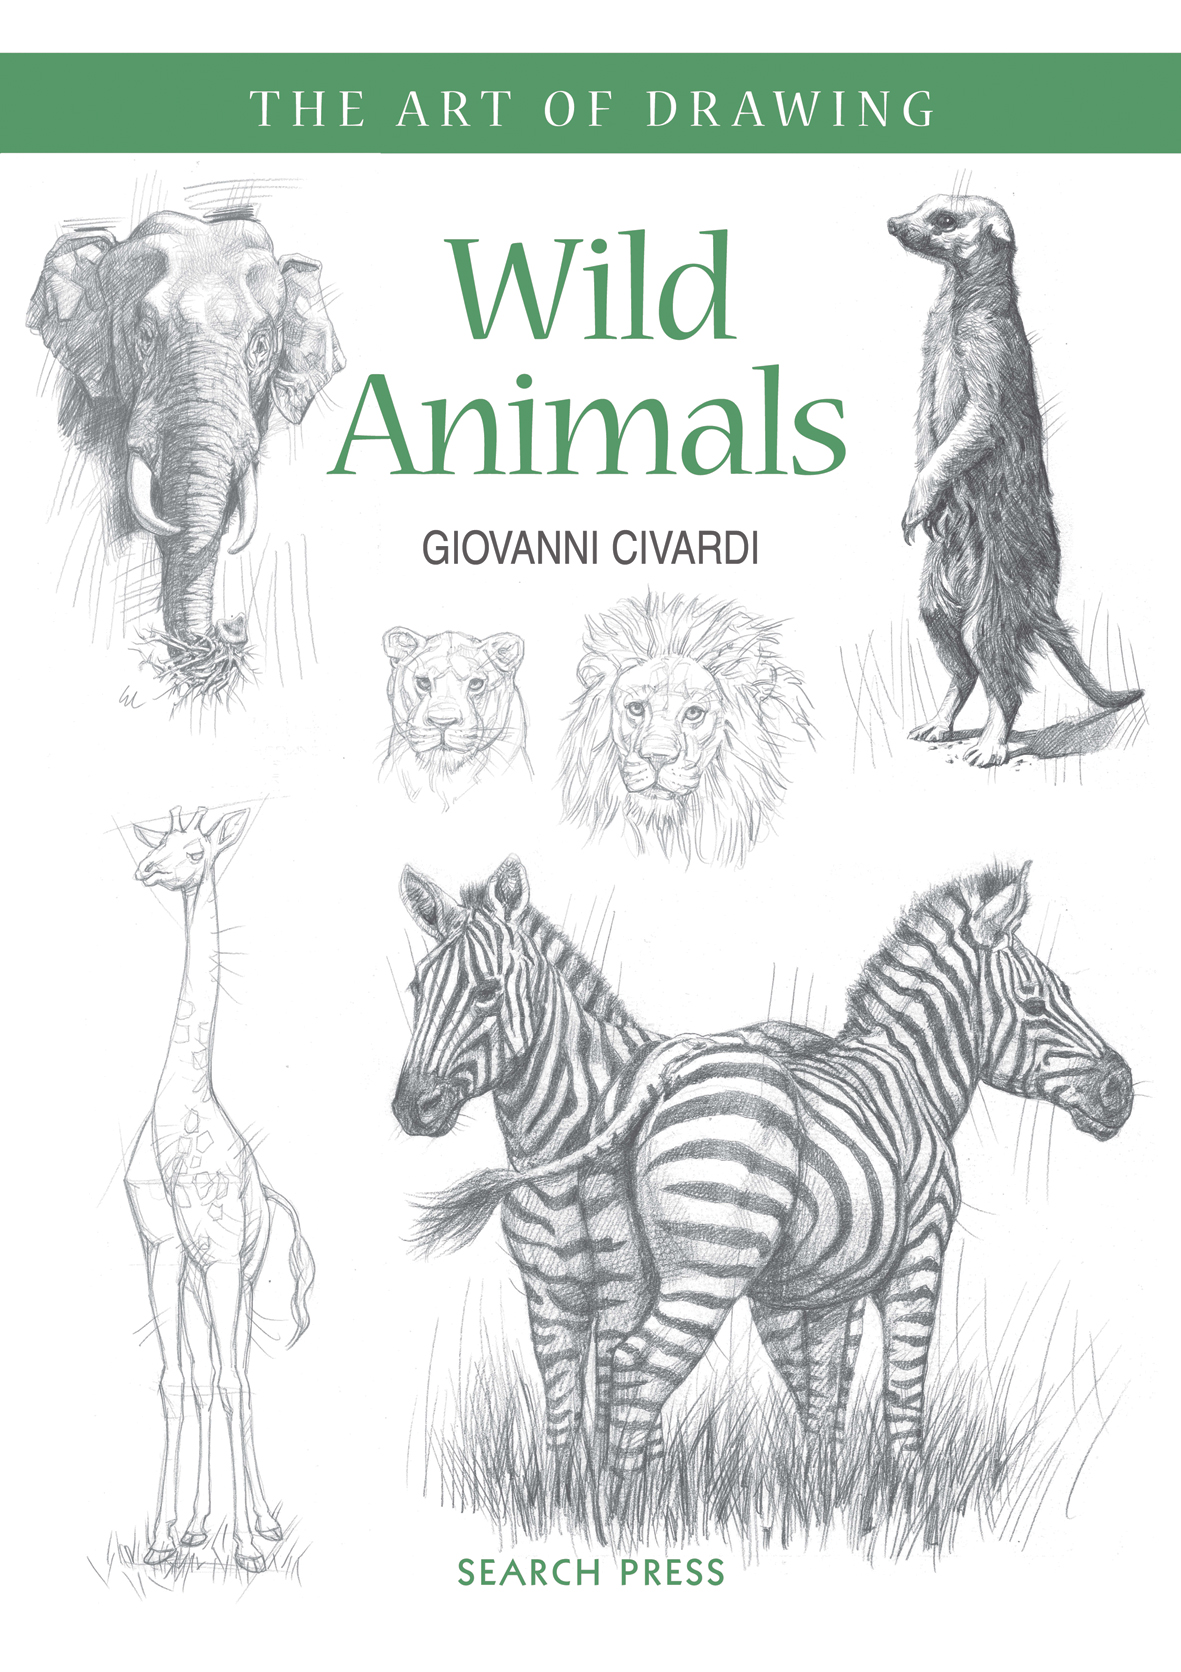 Search Press | Art of Drawing: Wild Animals by Giovanni Civardi